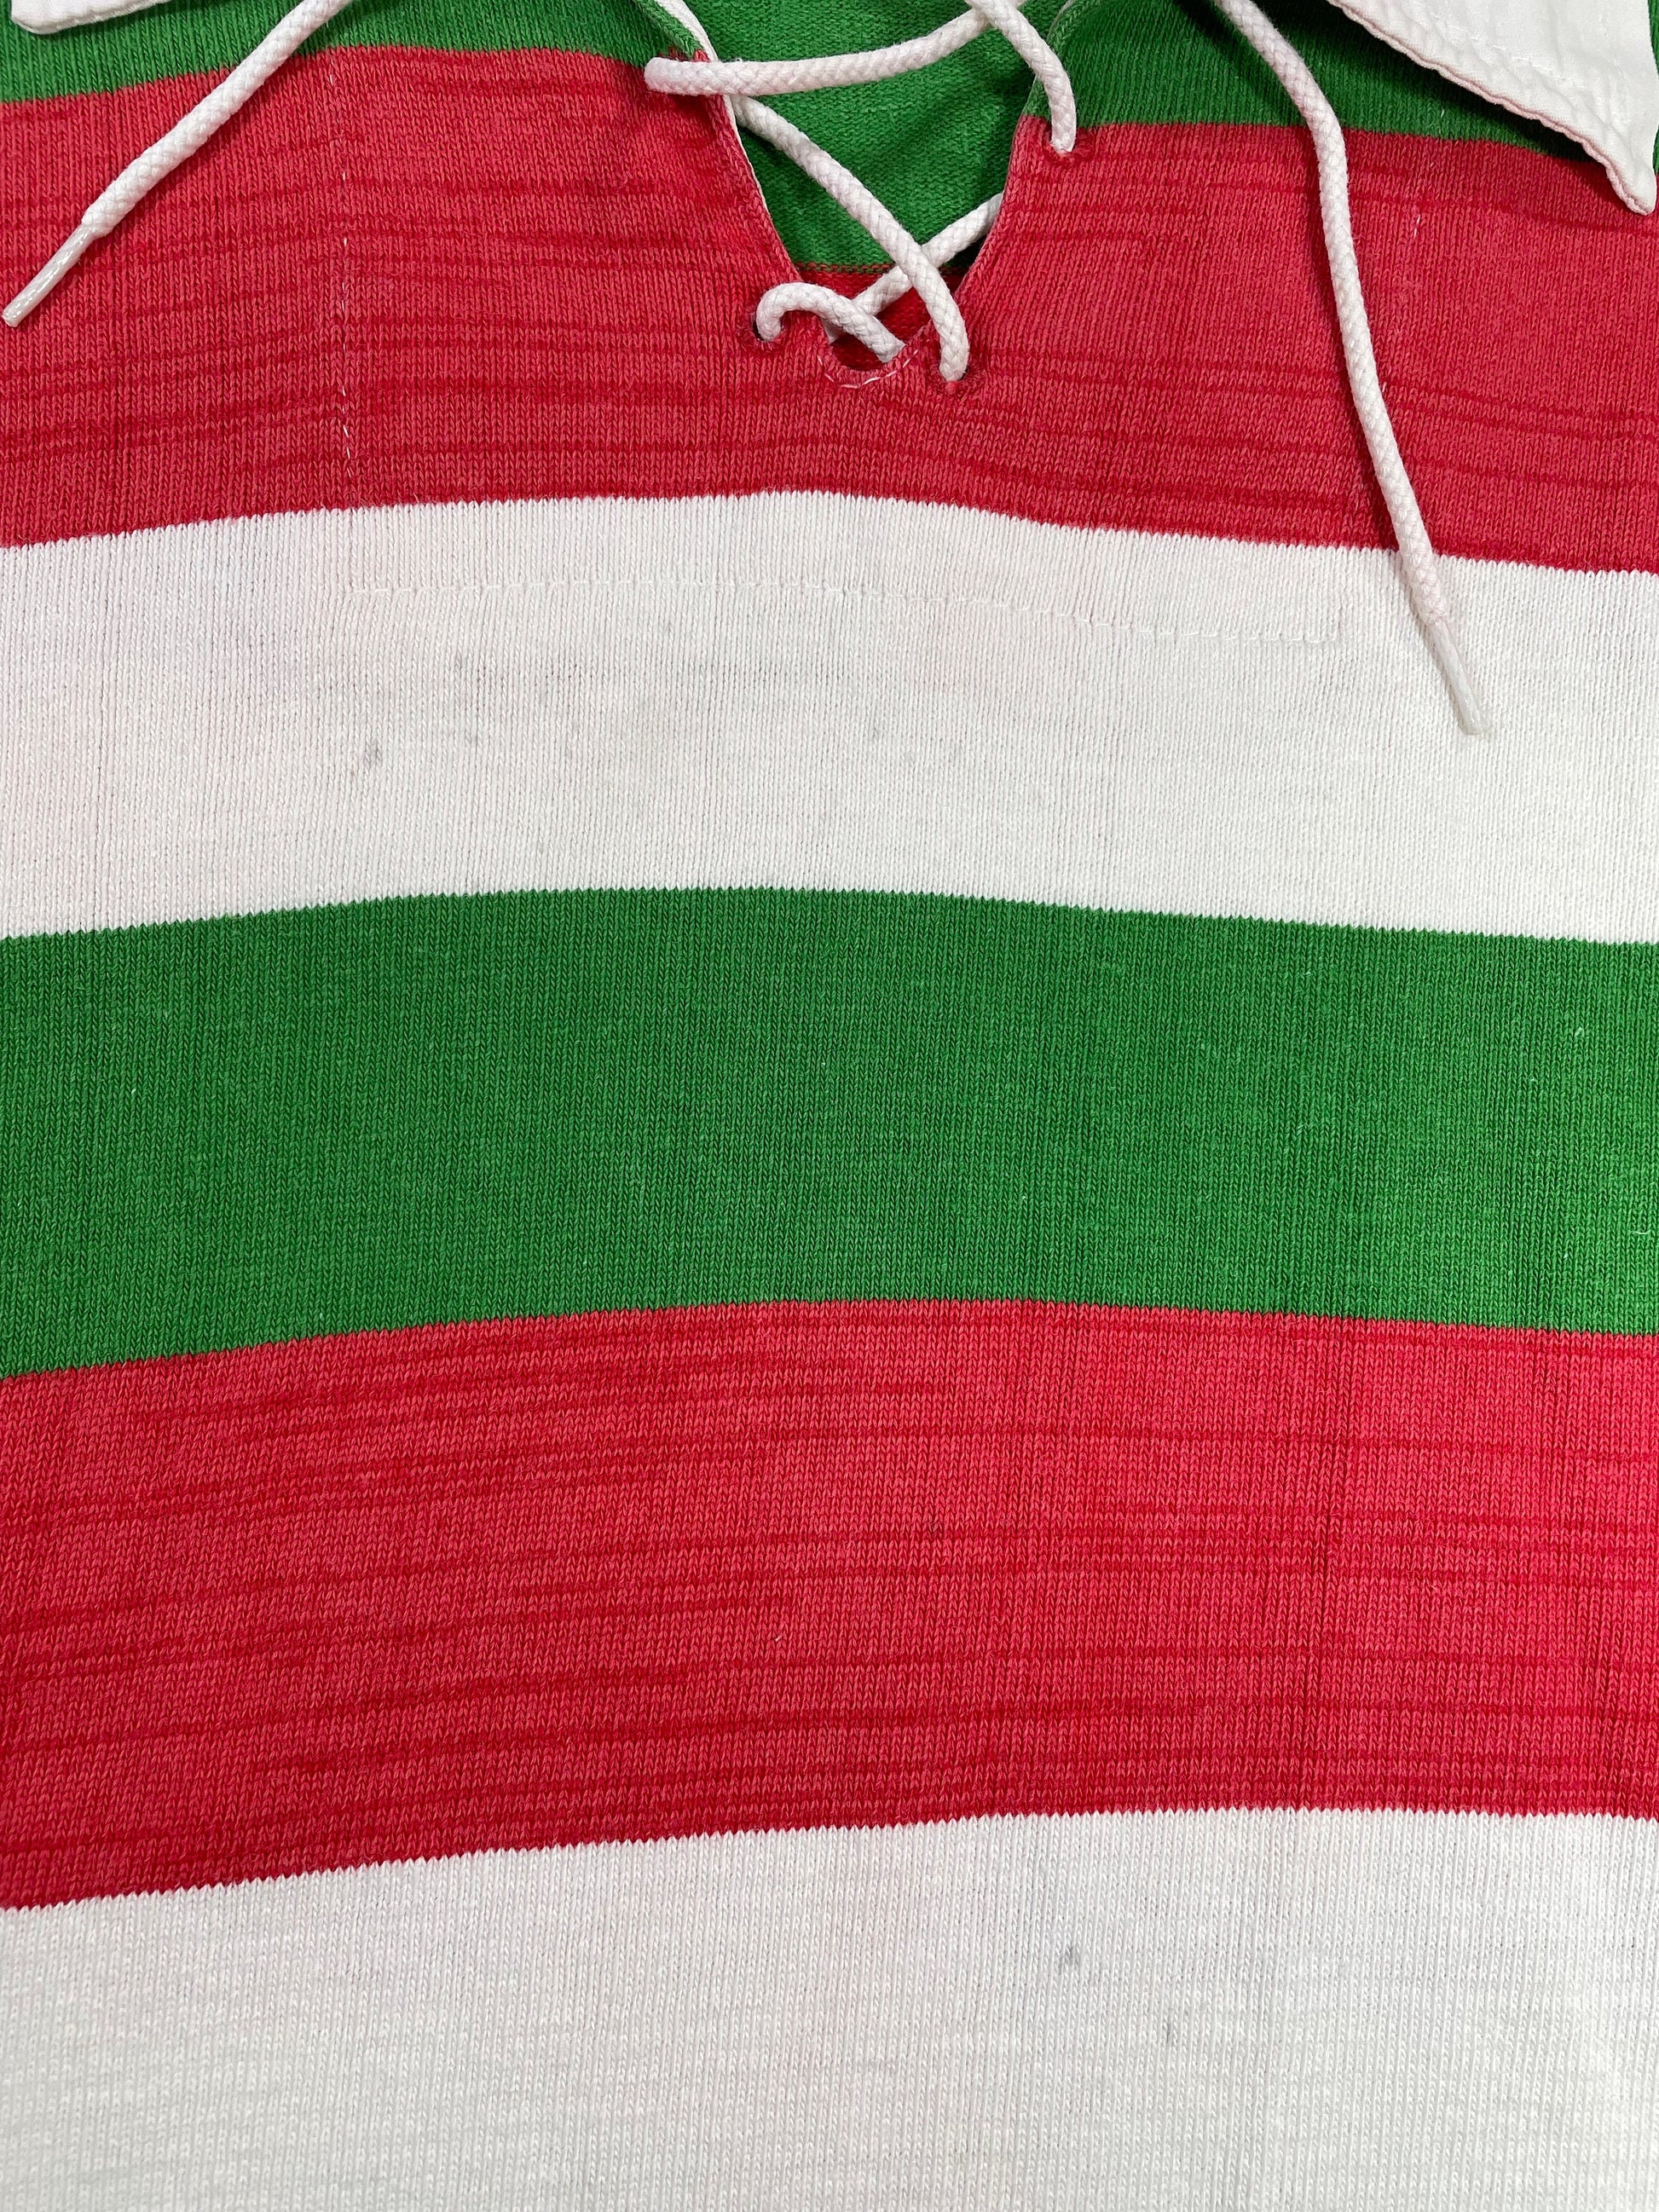 60s 70s Striped Knit Athletic Shirt - Men's Medium, Women's Large 